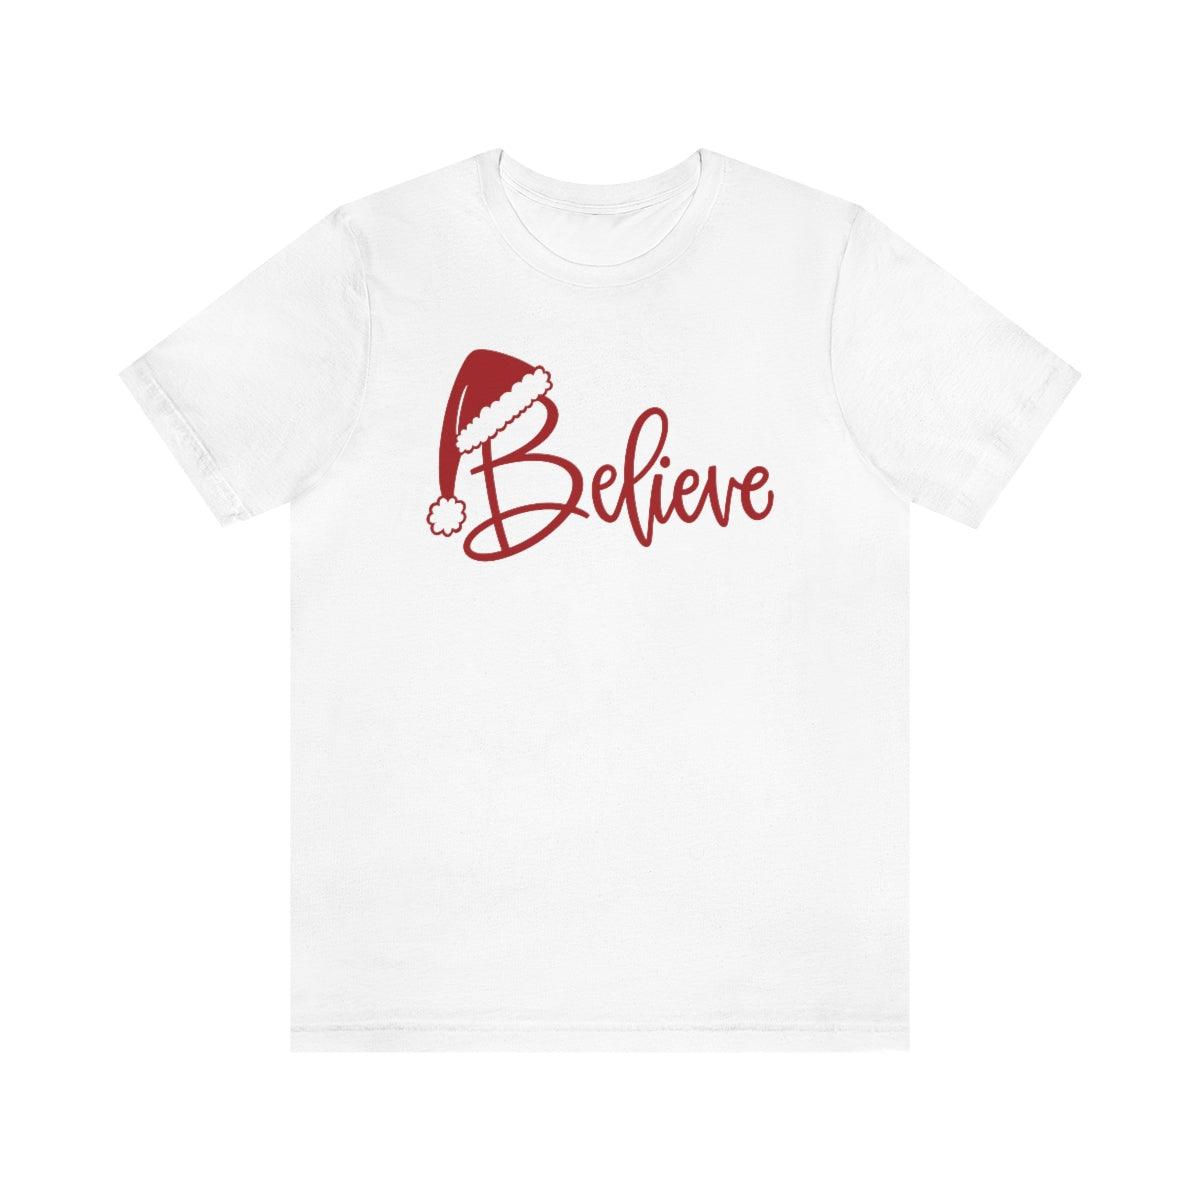 Believe Christmas Shirt Short Sleeve Tee - Crystal Rose Design Co.